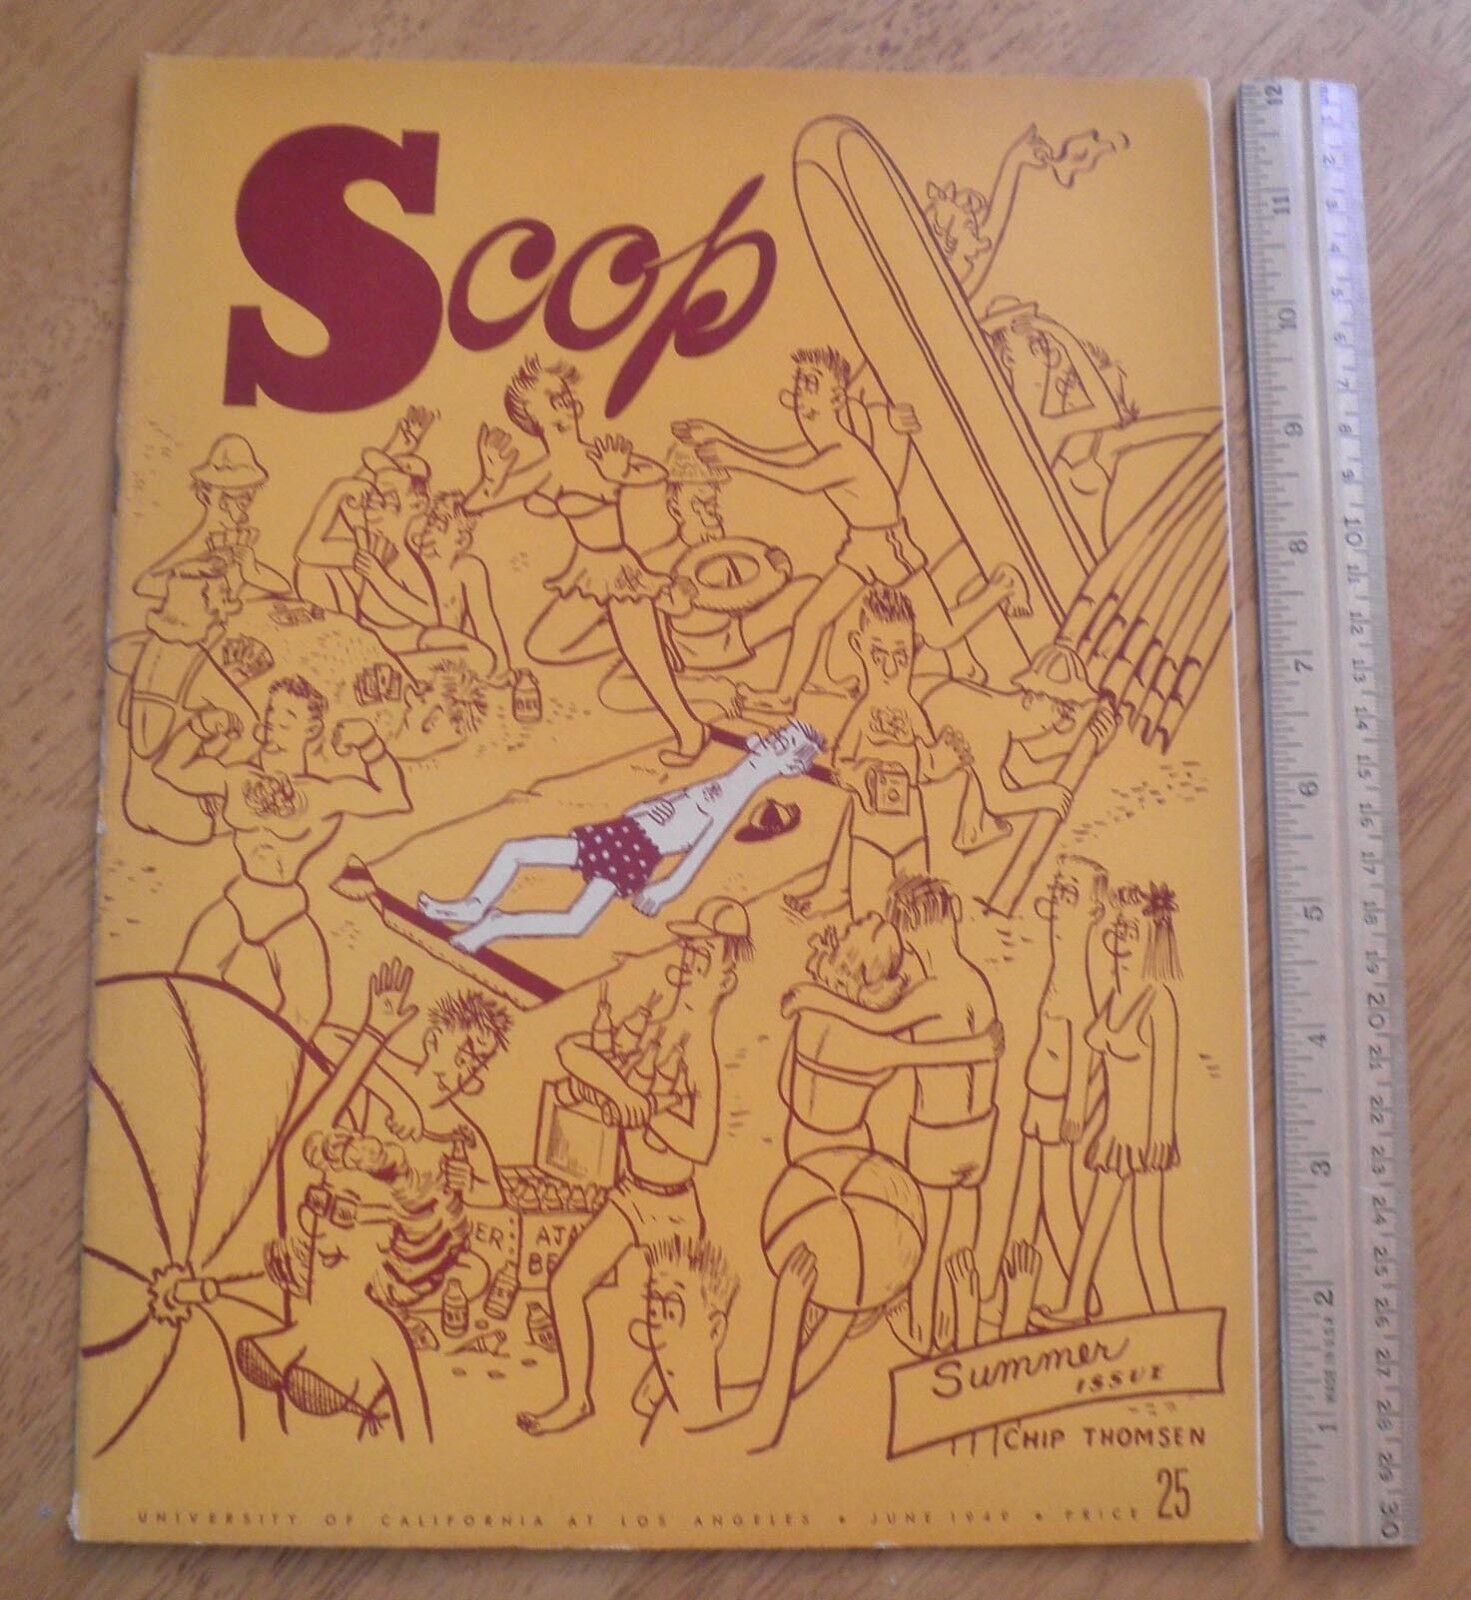 SCOP UCLA June 1949 surf board cover humor campus life magazine